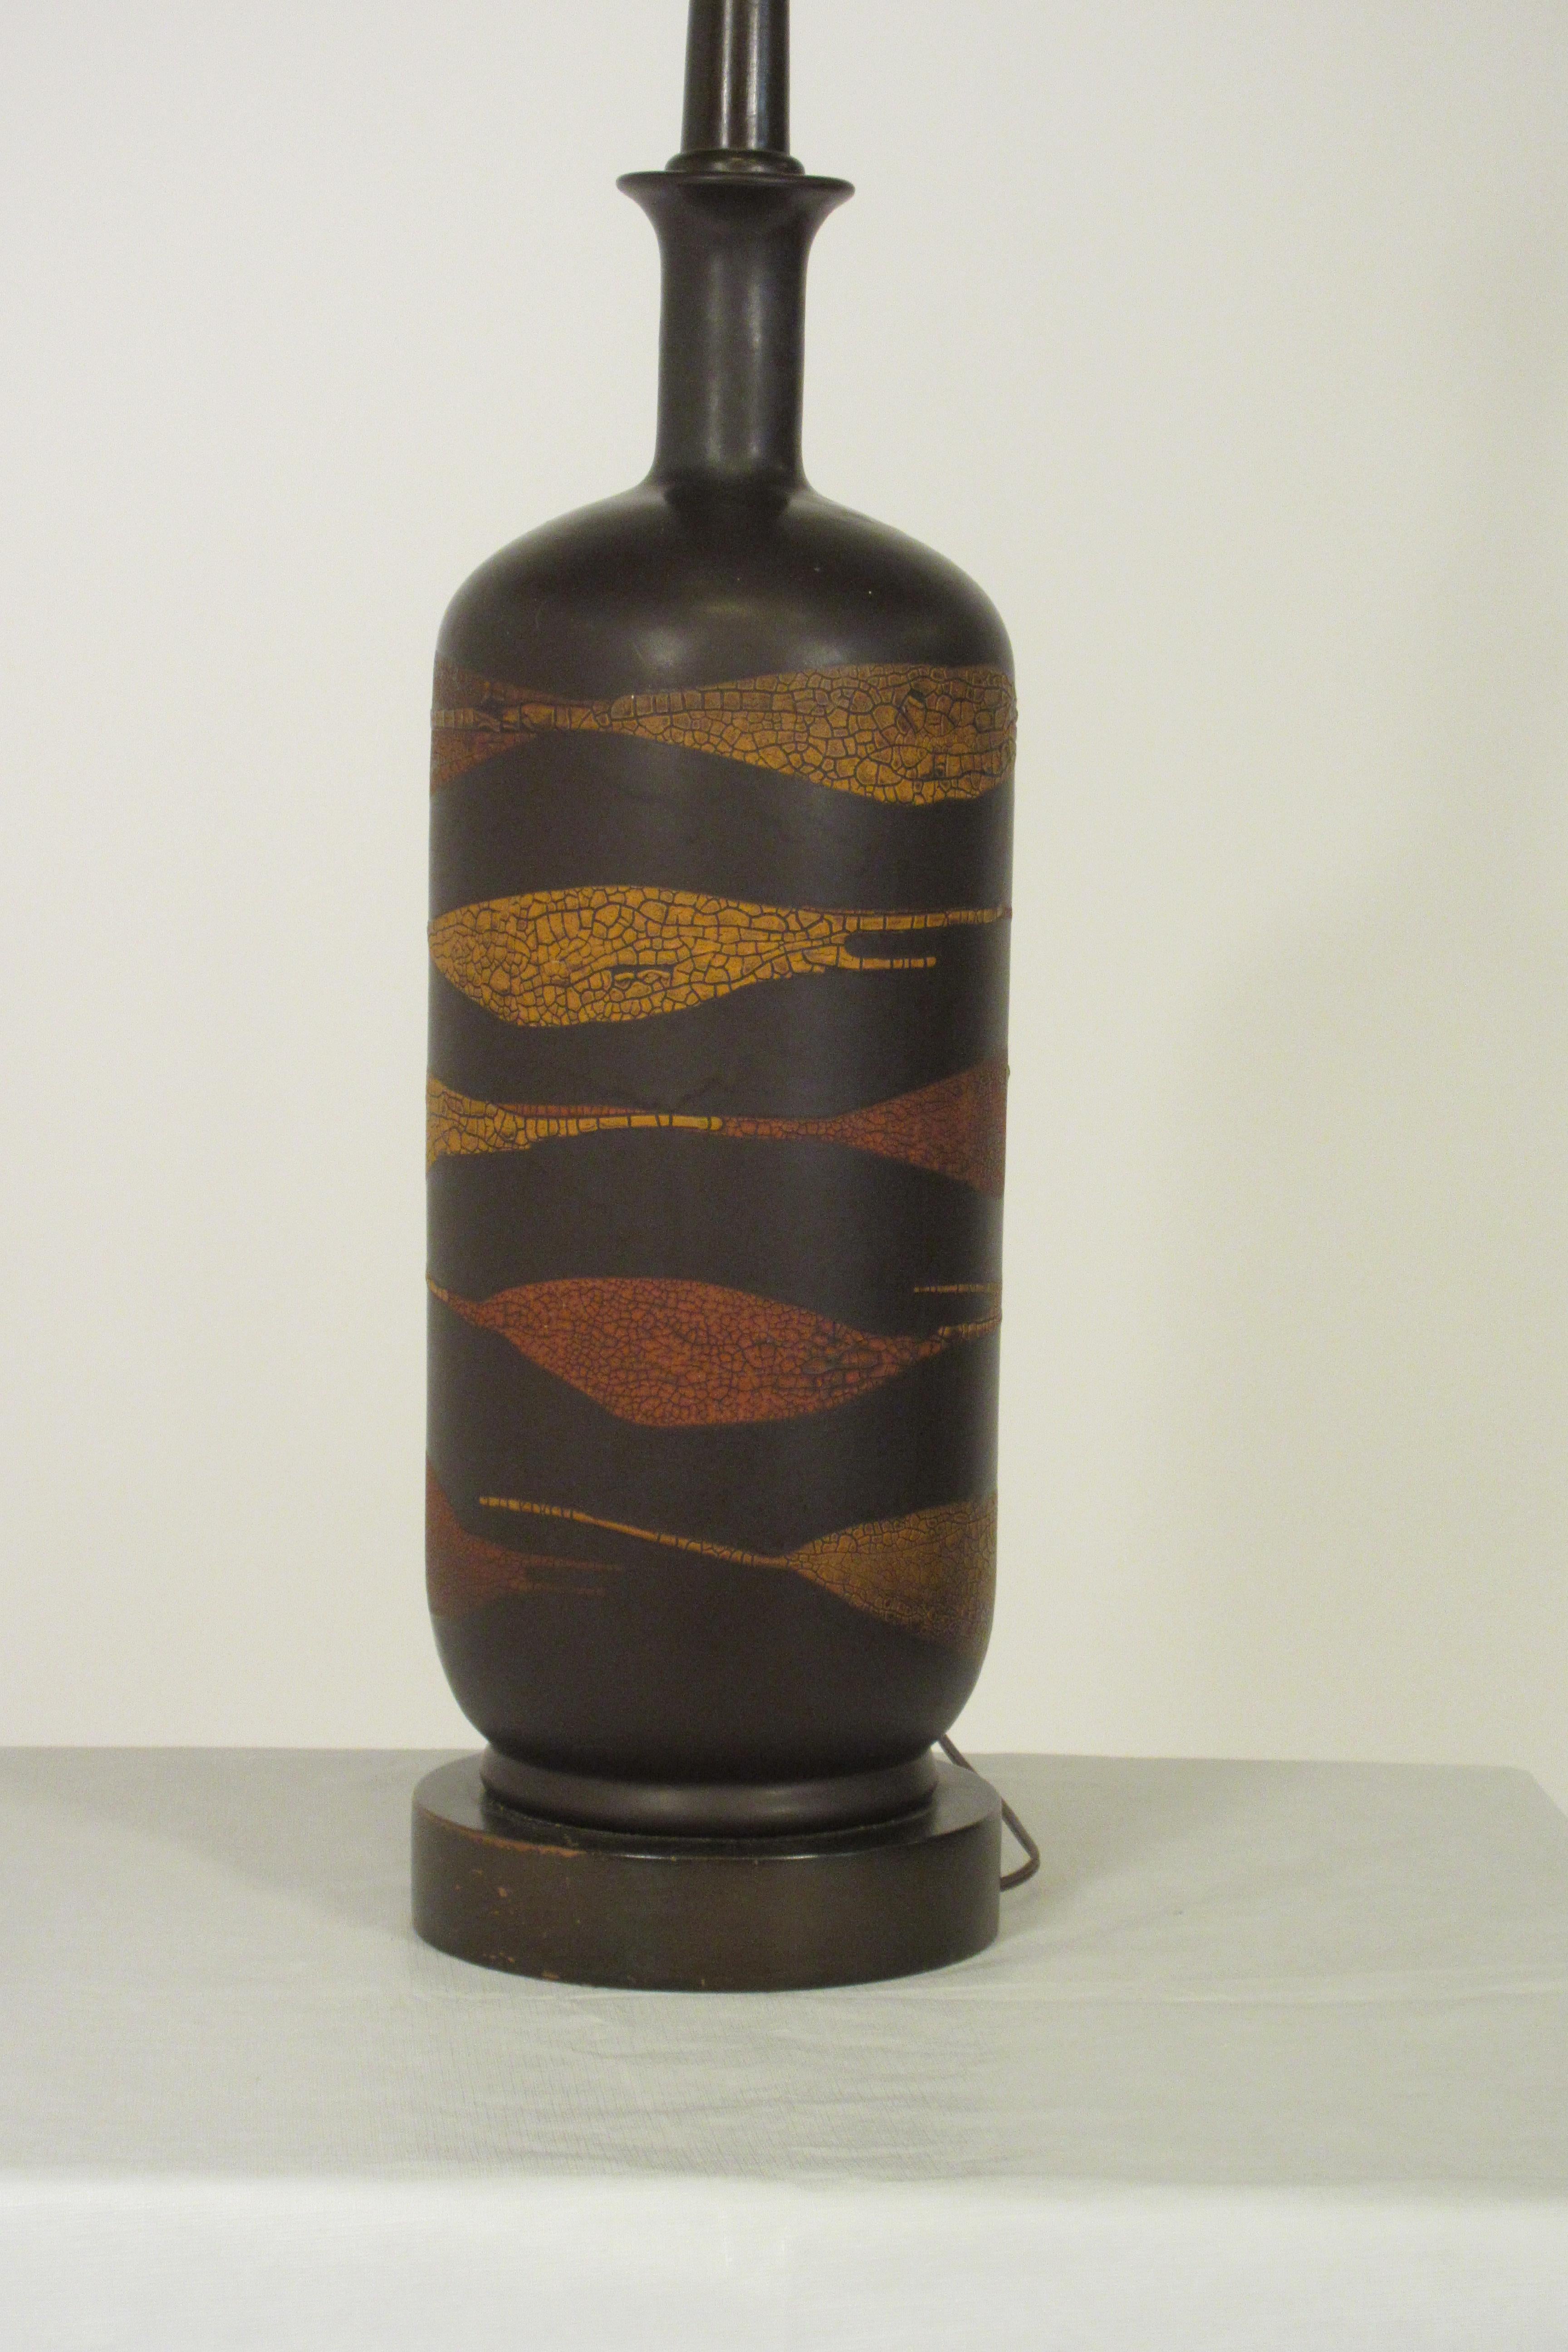 1960s ceramic brown swirl lamp with snake skin pattern on wood base.